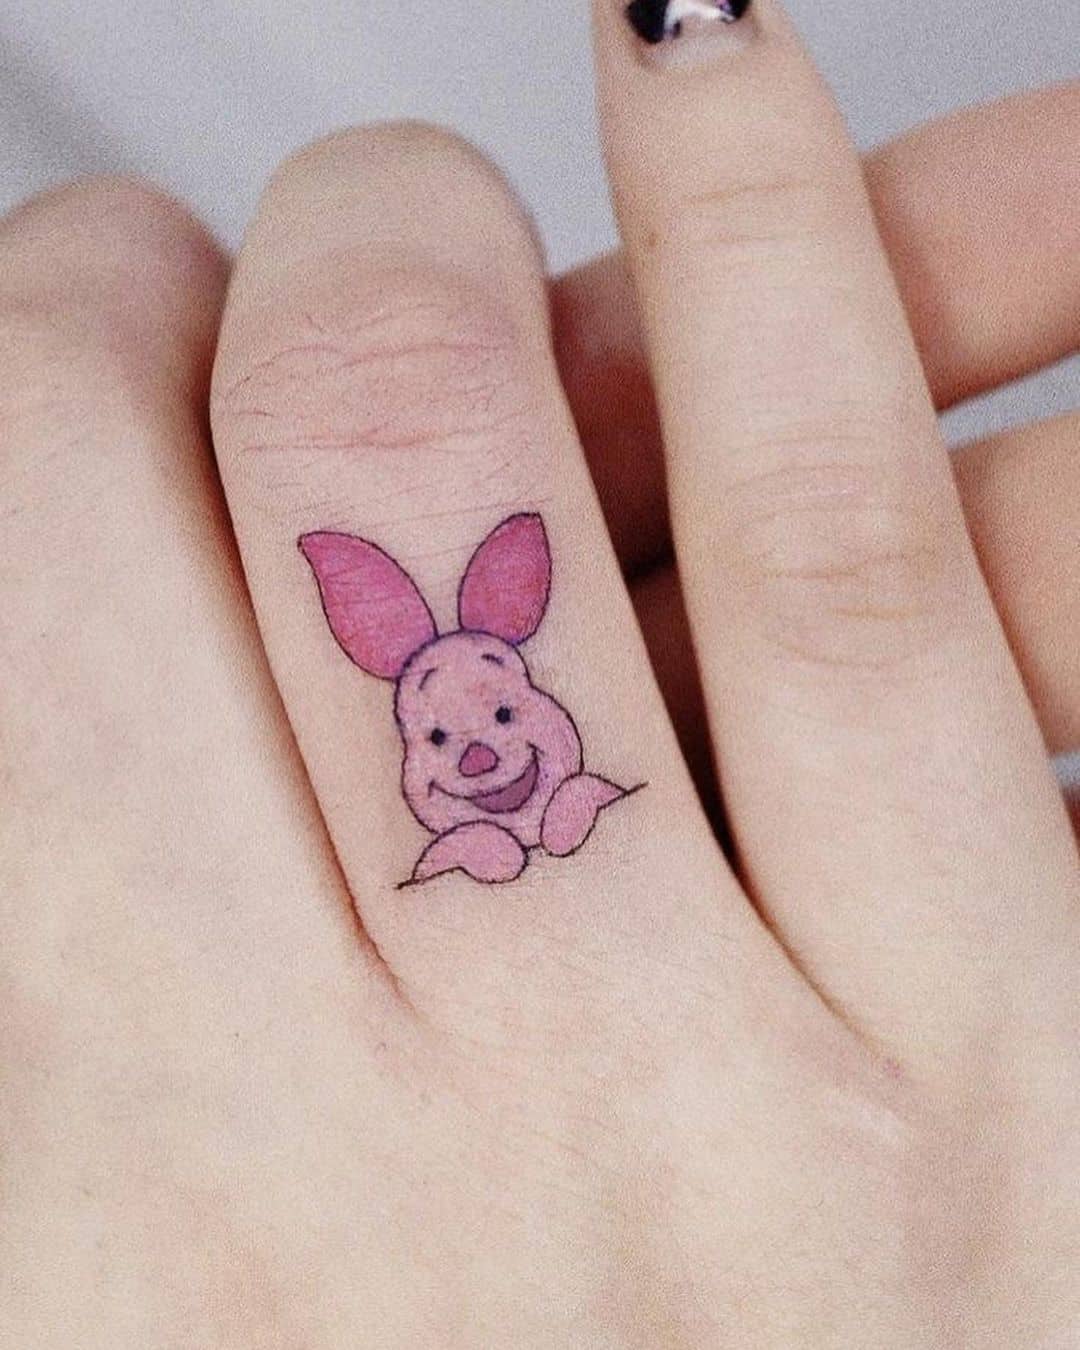 Pig on finger tattoo design by tattooraccoon